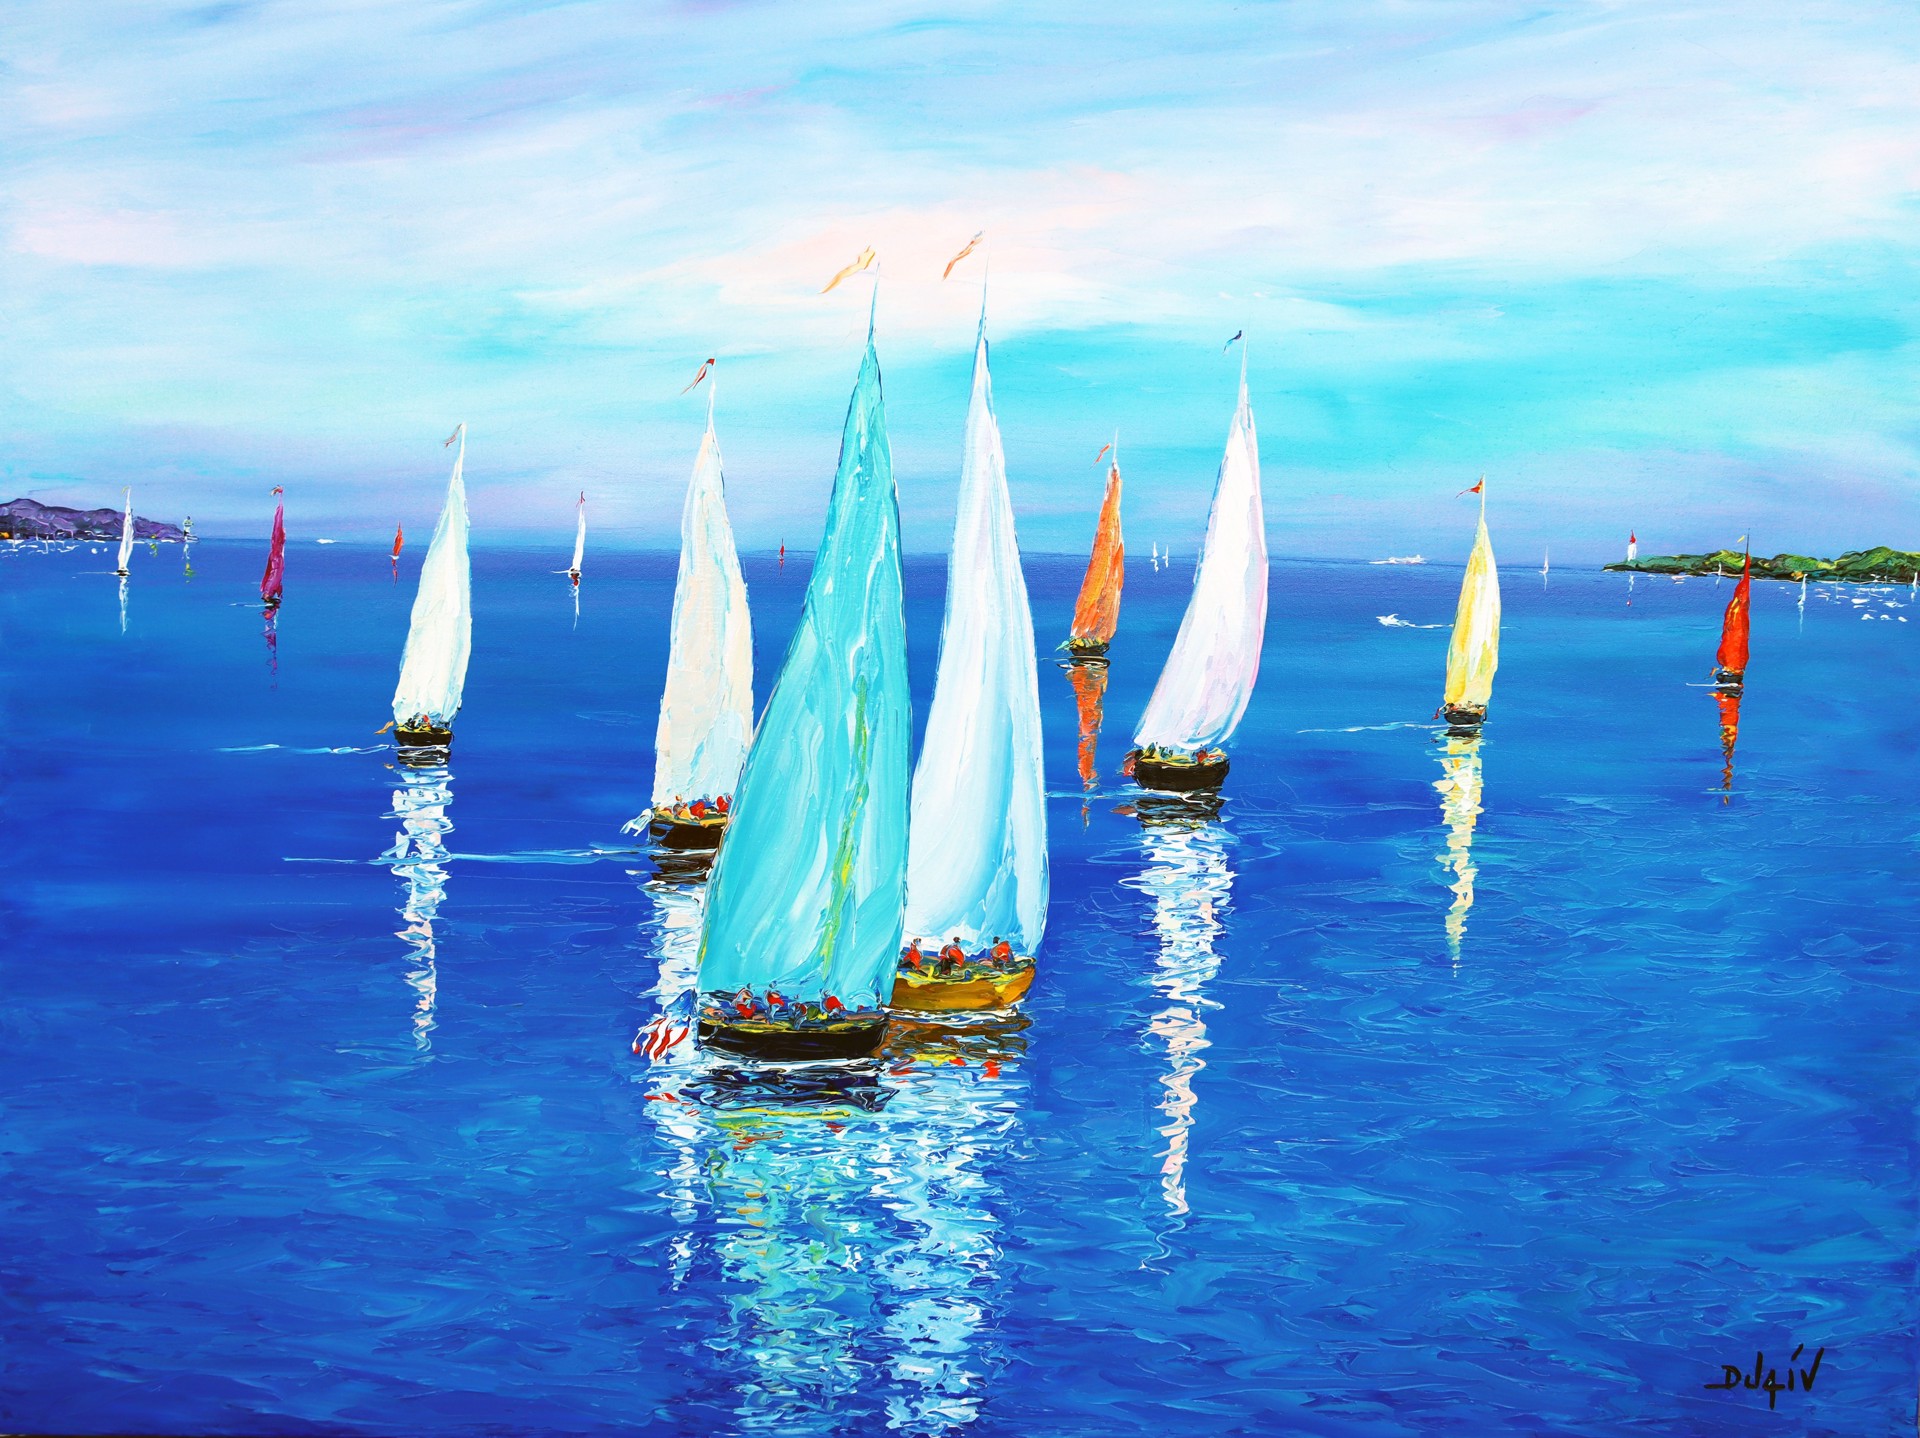 White Sails, Blue Sky by Duaiv